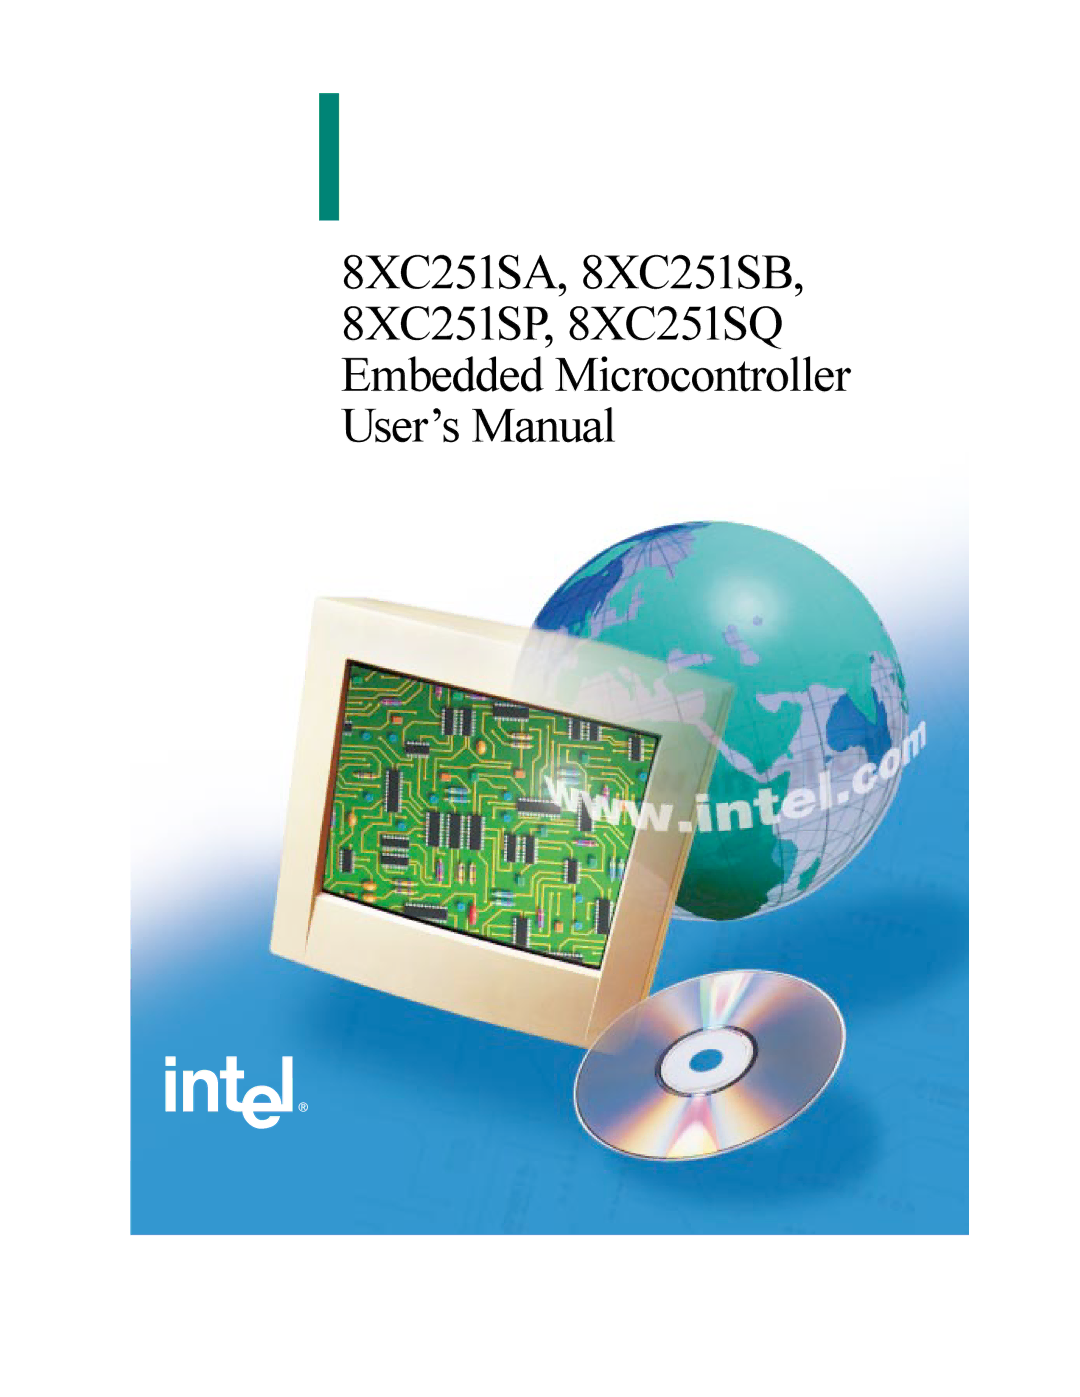 Intel 8XC251SP, 8XC251SA, 8XC251SQ, 8XC251SB, Embedded Microcontroller manual 